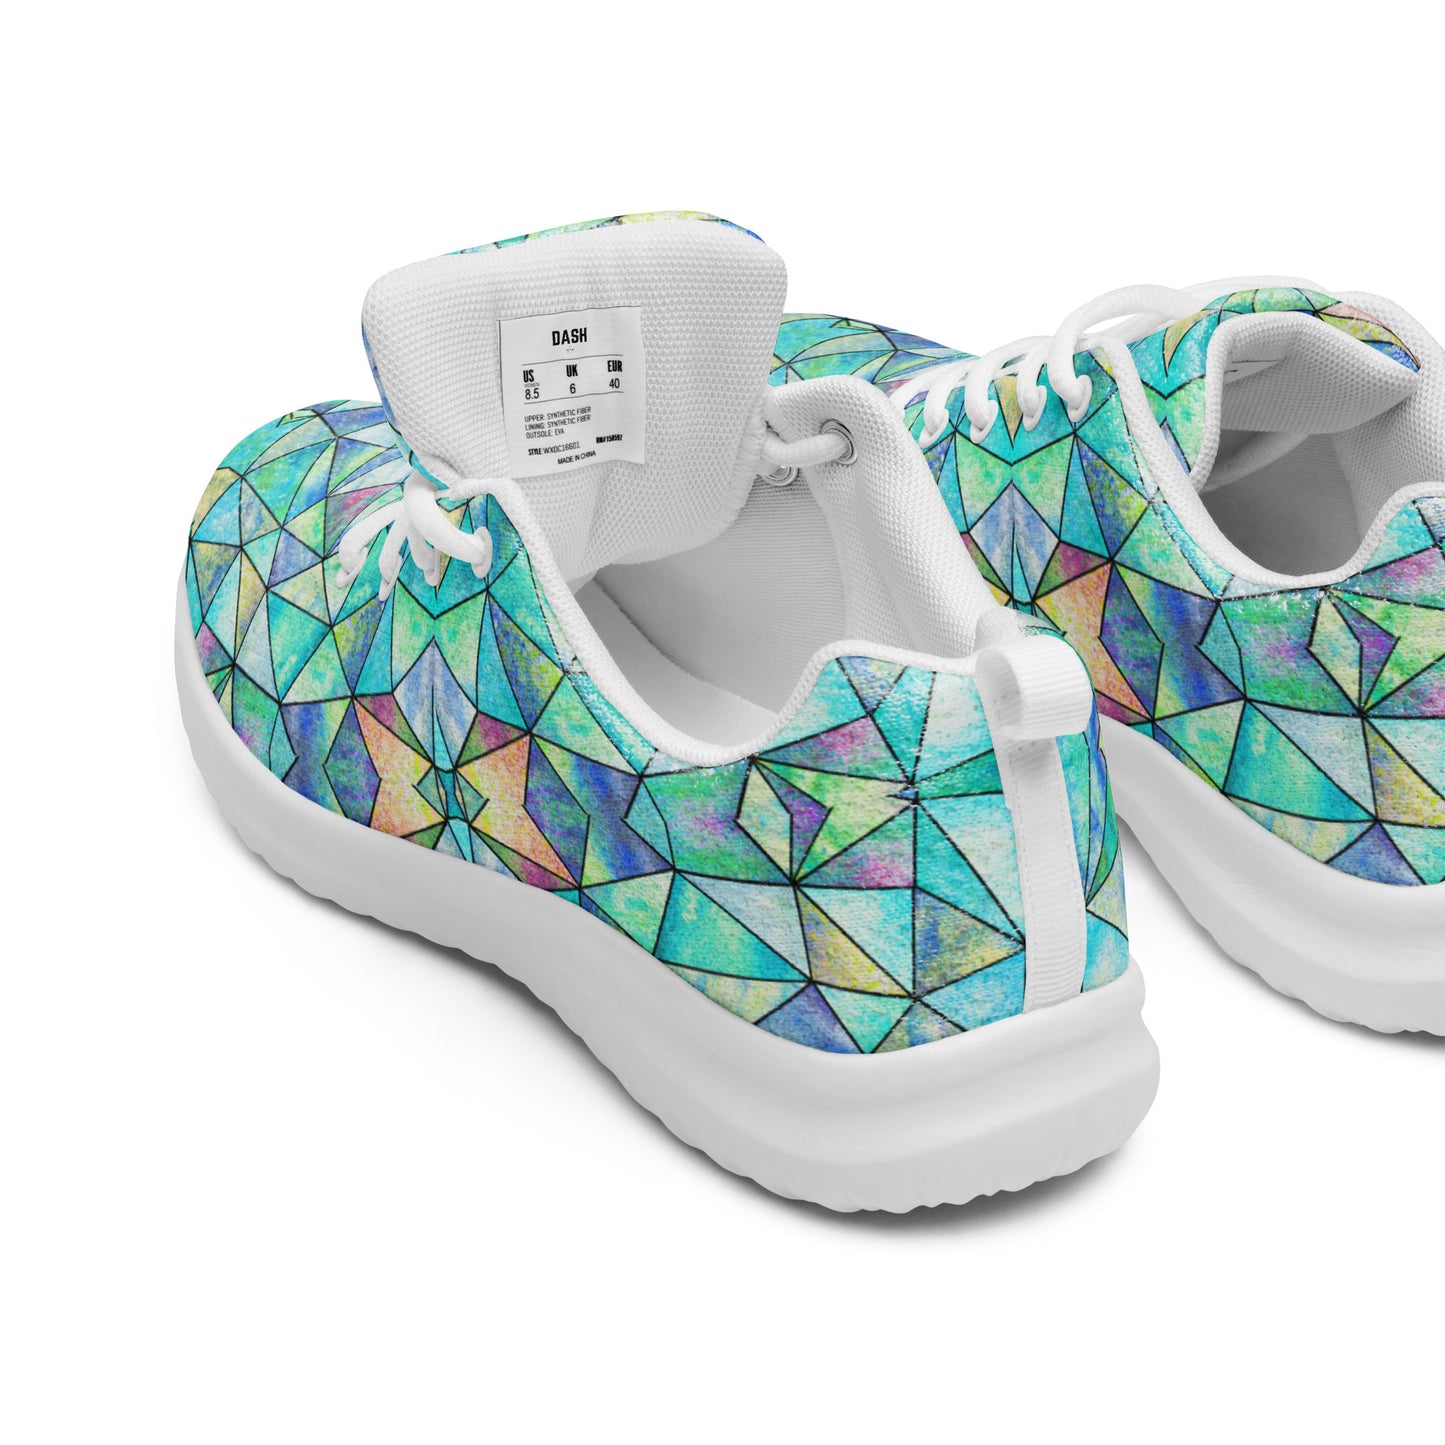 DASH Geo Mosaic Aqua Men’s Athletic Shoes Lightweight Breathable Design by IOBI Original Apparel